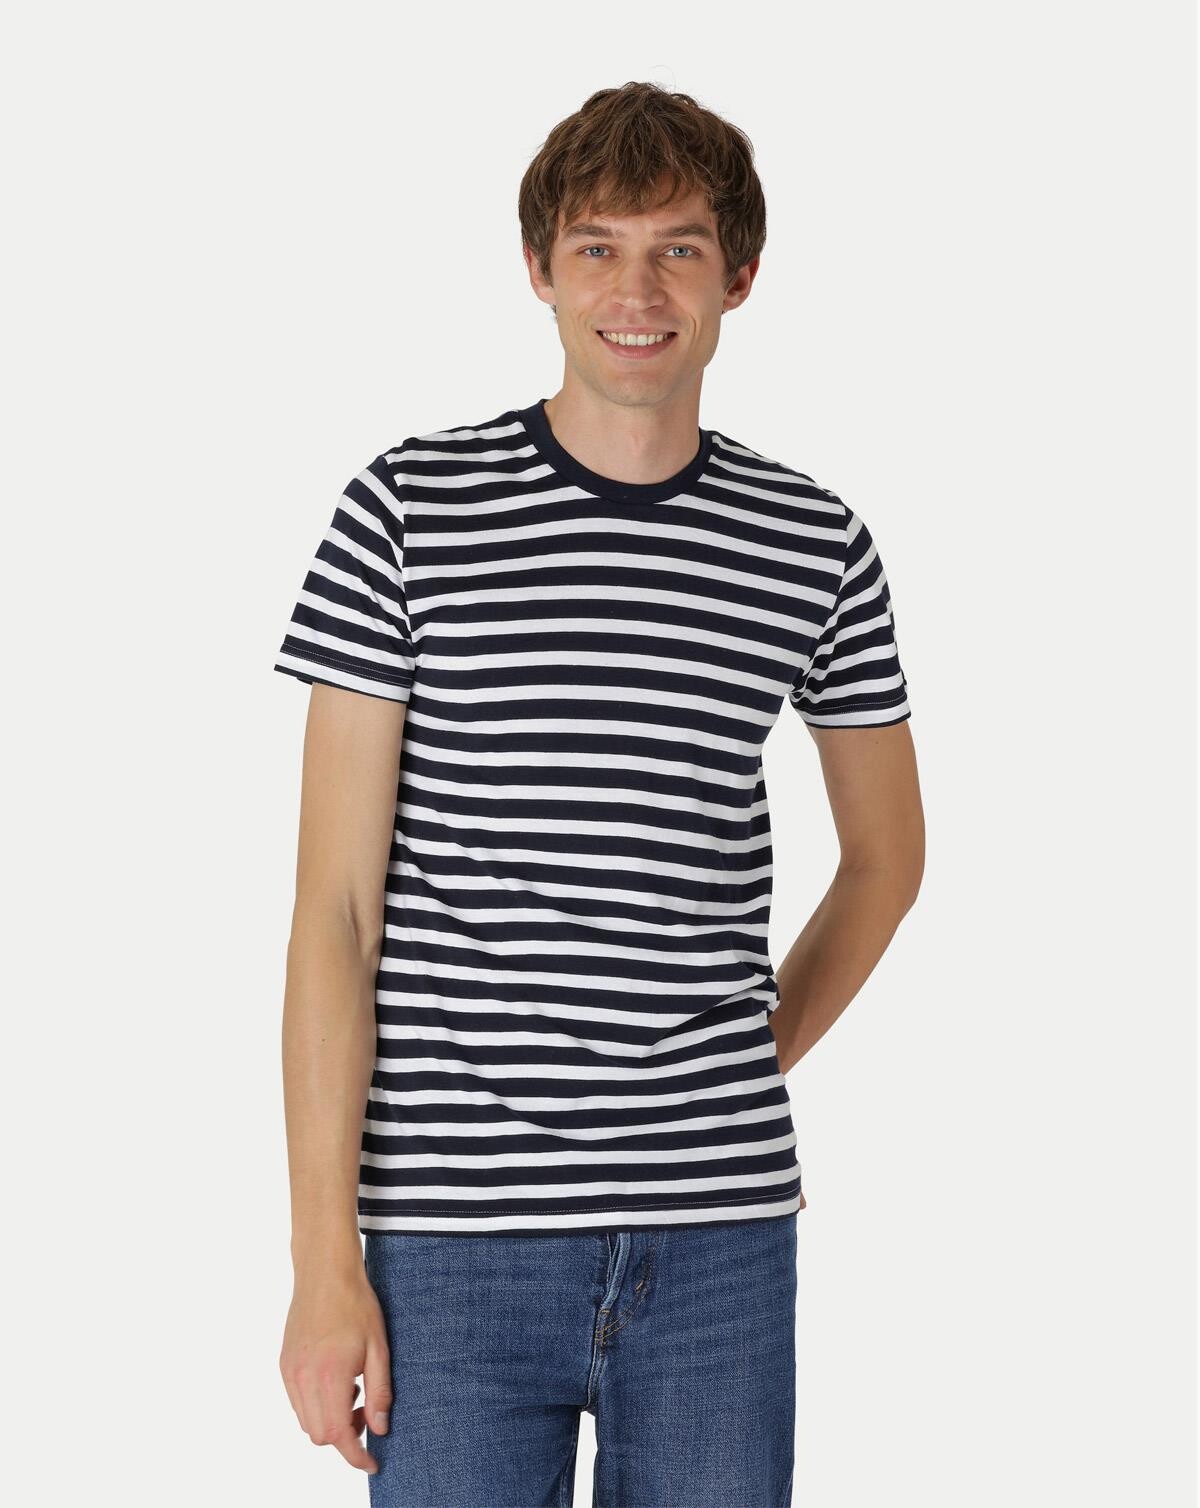 Neutral Økologisk T-shirt til - Tætsiddende (Blå / Hvid stribet, S)